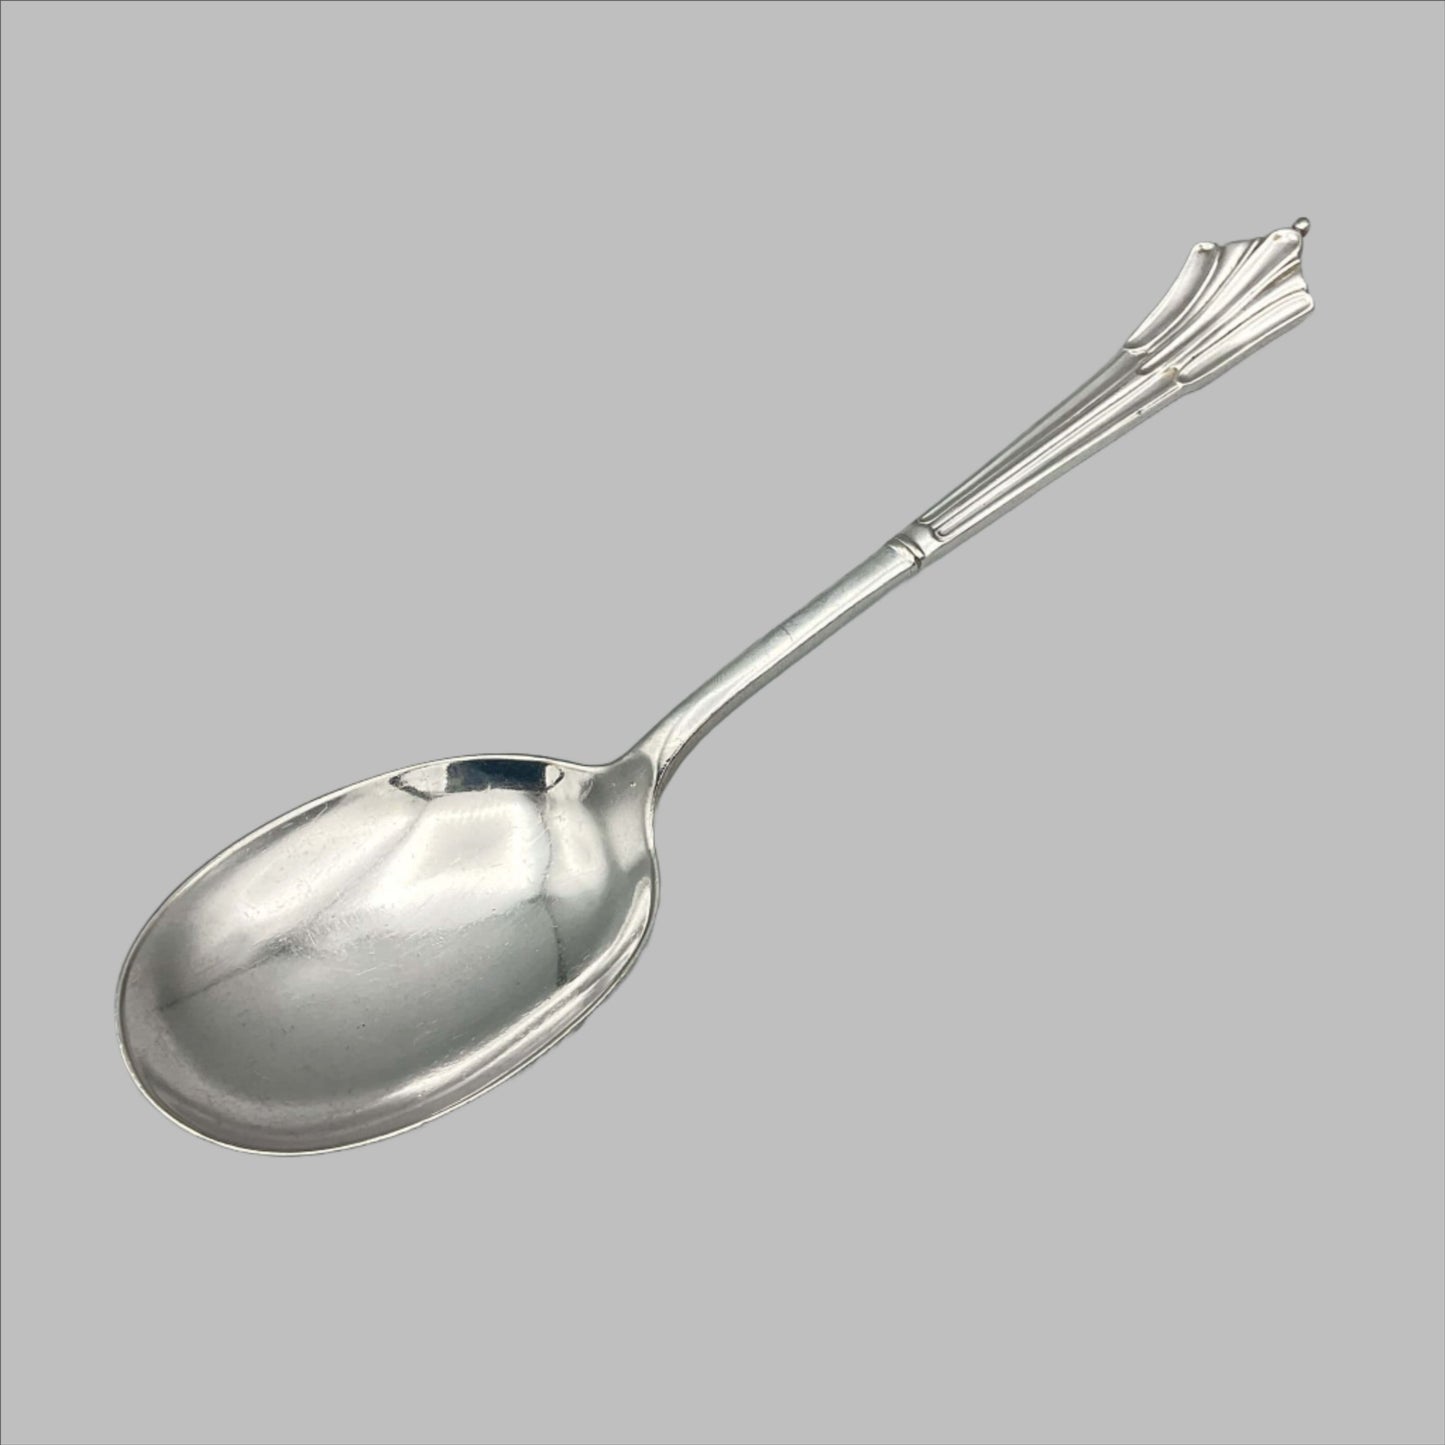 Beautiful 1940s Art Deco Dessert Spoon on a plain background